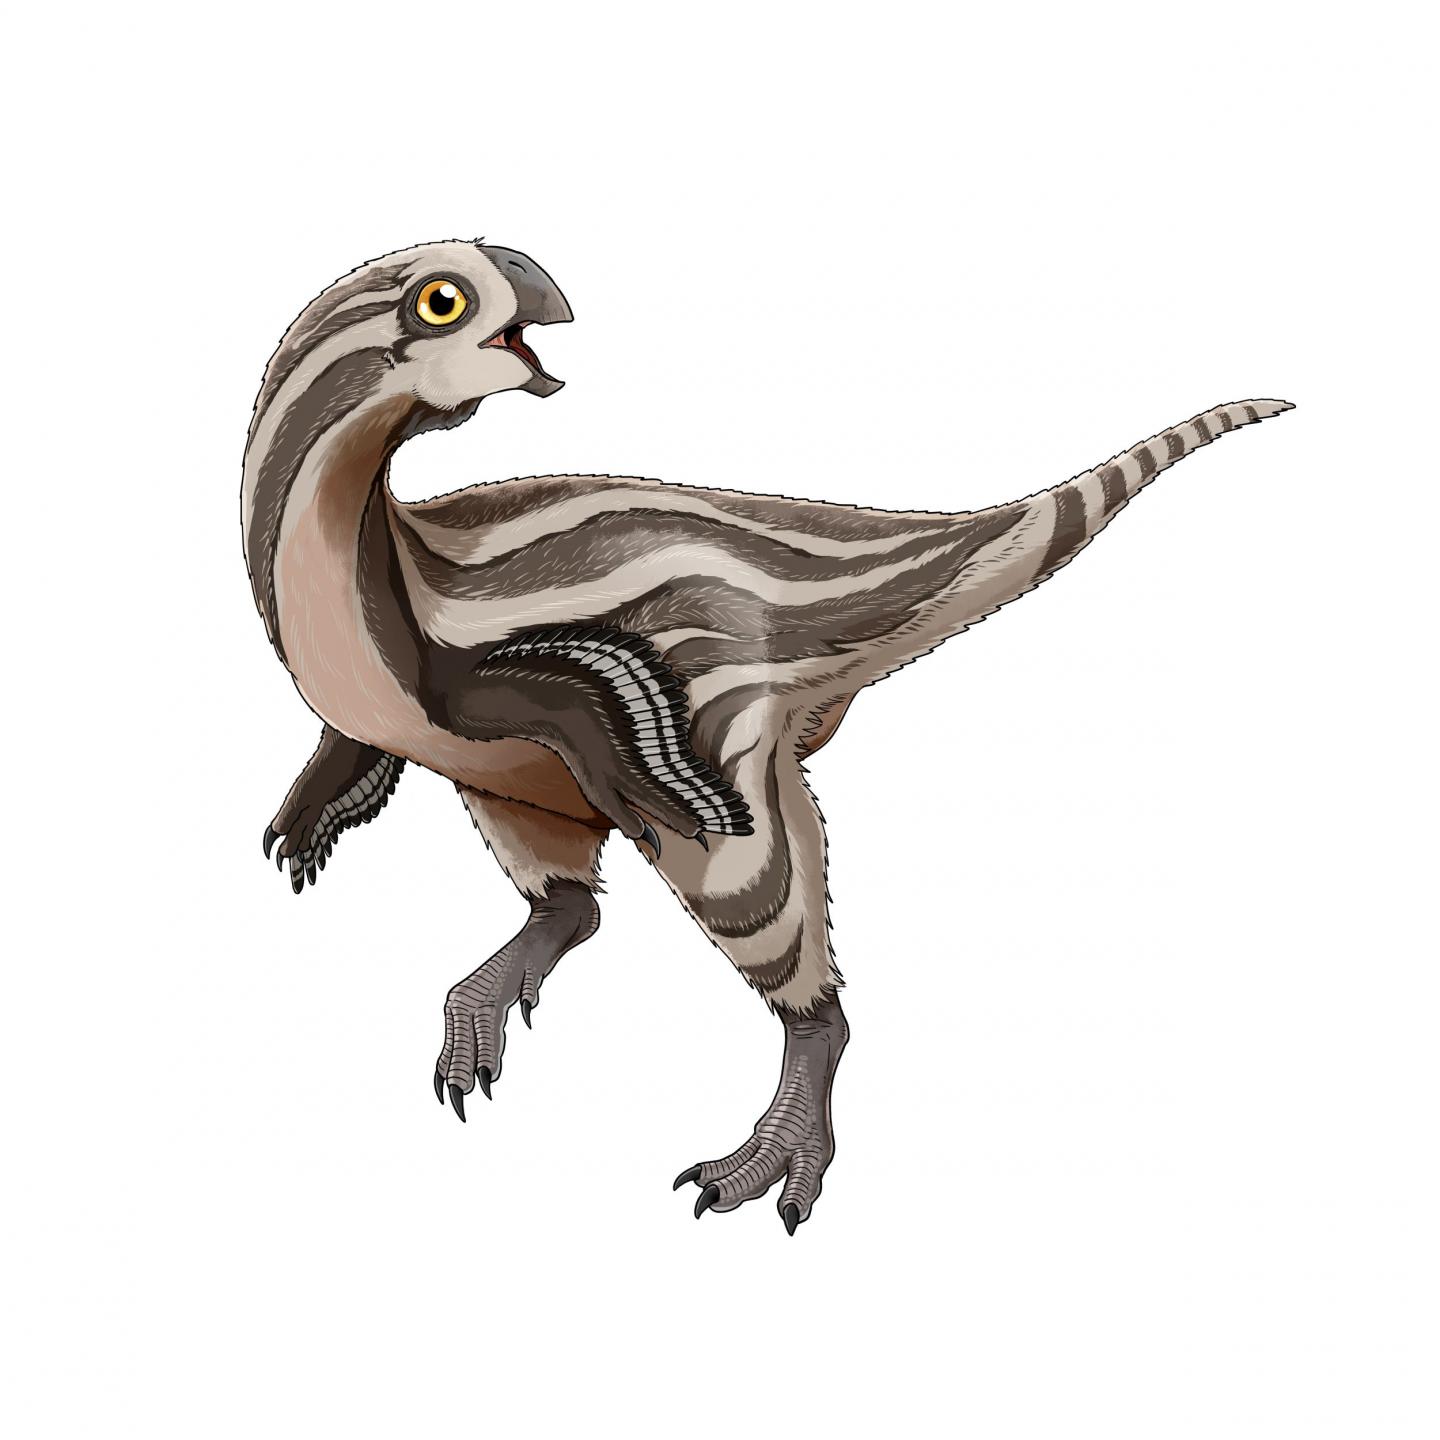 New Oviraptorosaur Species Discovered in Mongolia